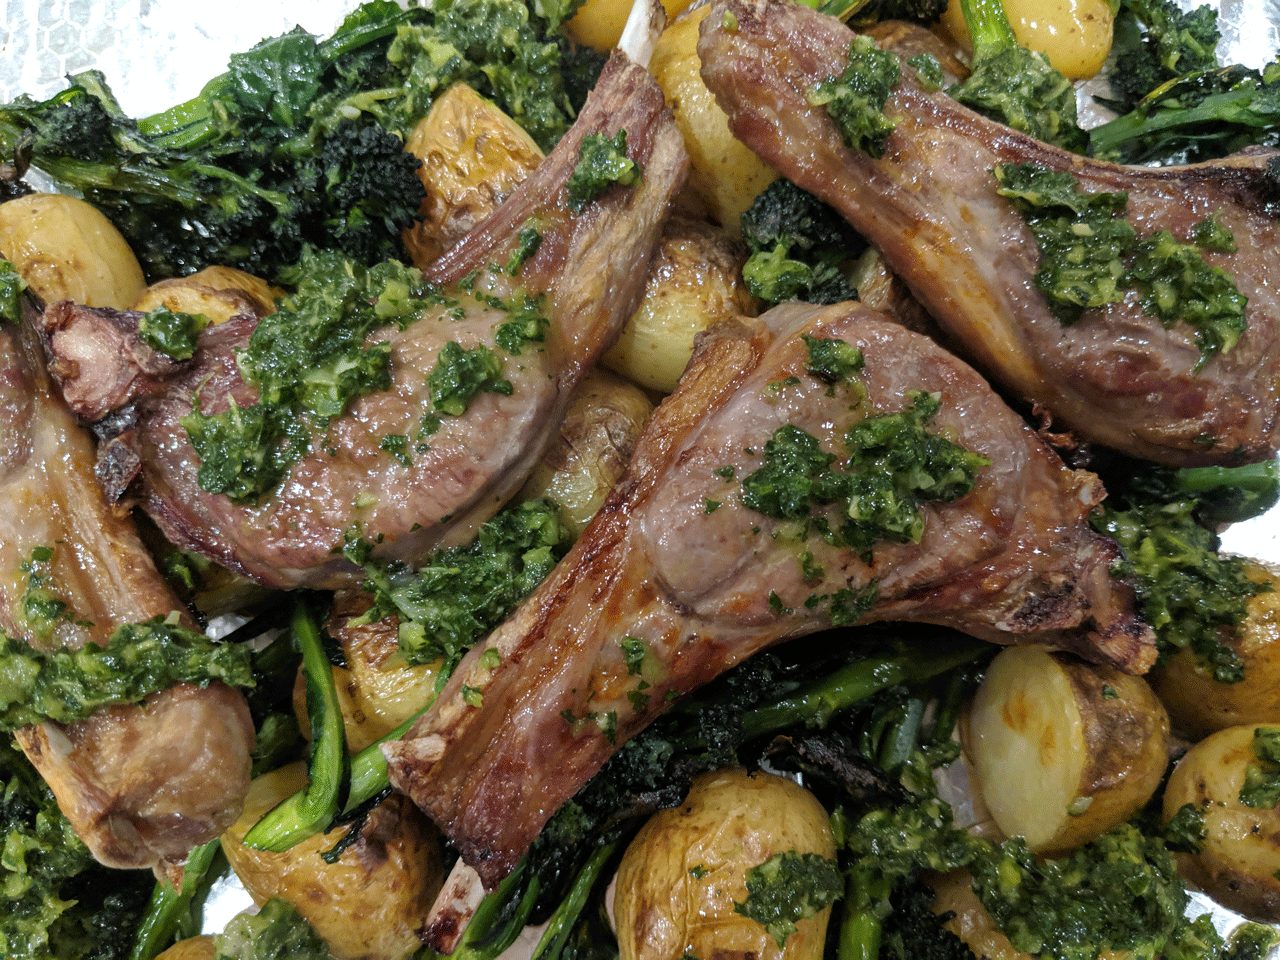 BBQ Lamb Chops With Chimichurri Sauce, Broccoli And New Potatoes